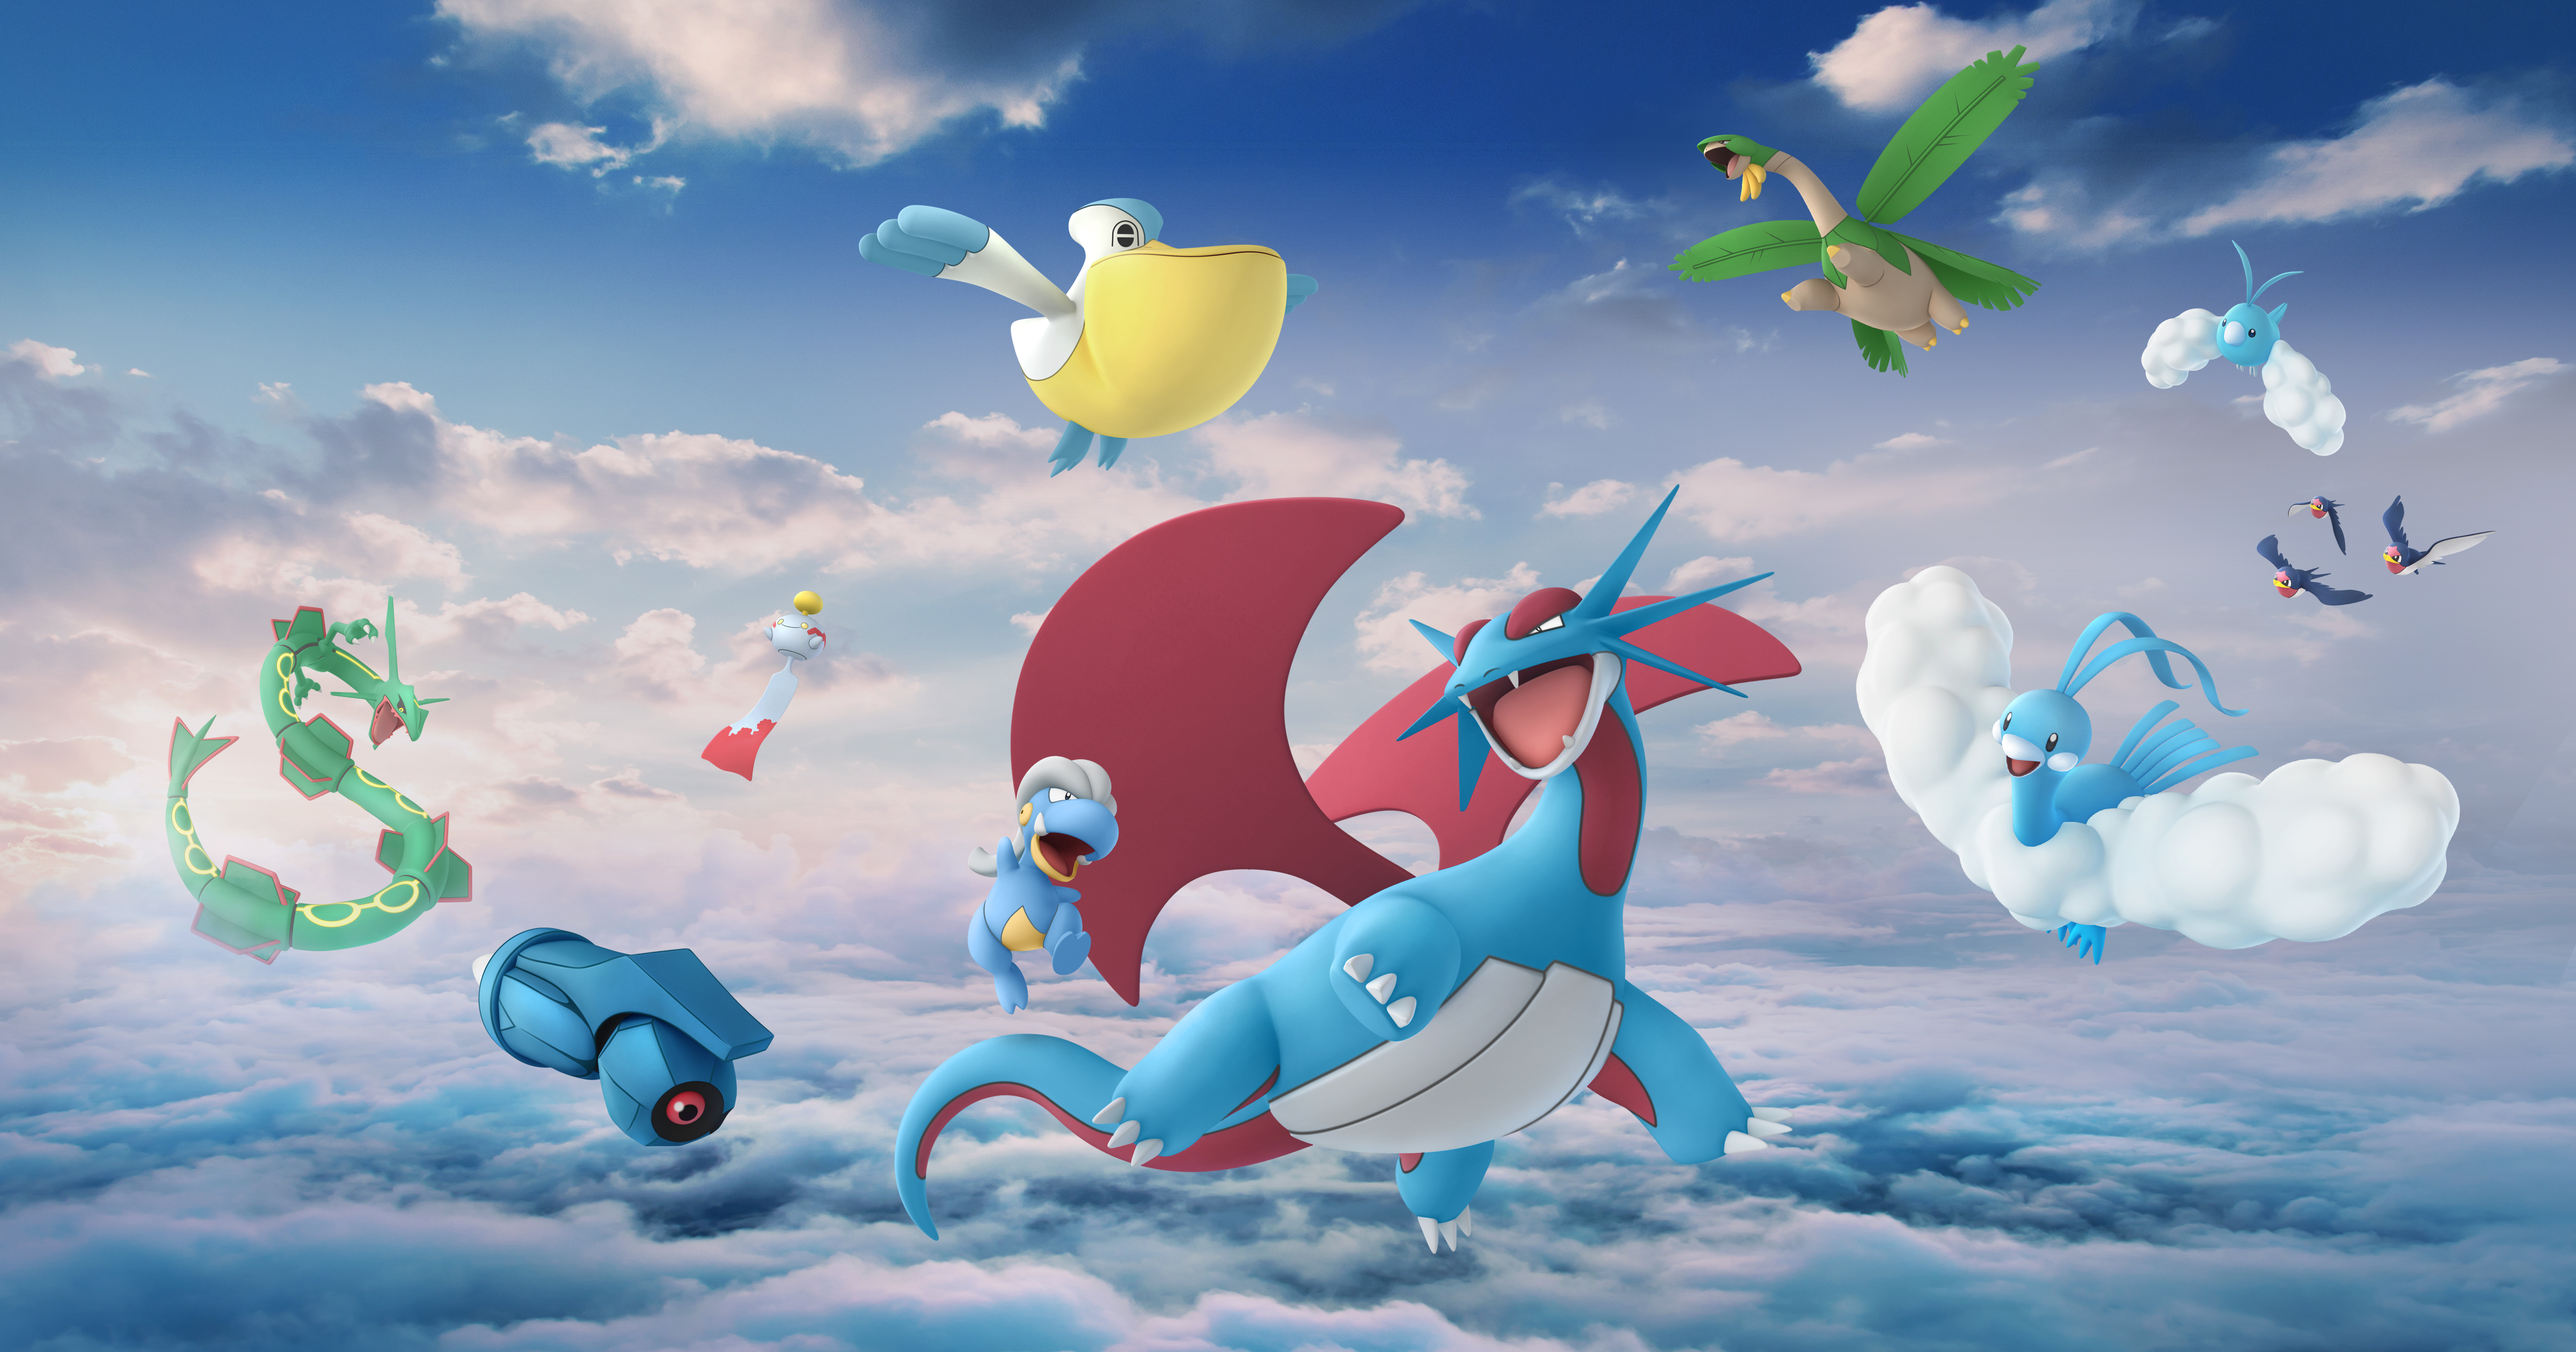 Video Game Pokémon GO HD Wallpaper | Background Image